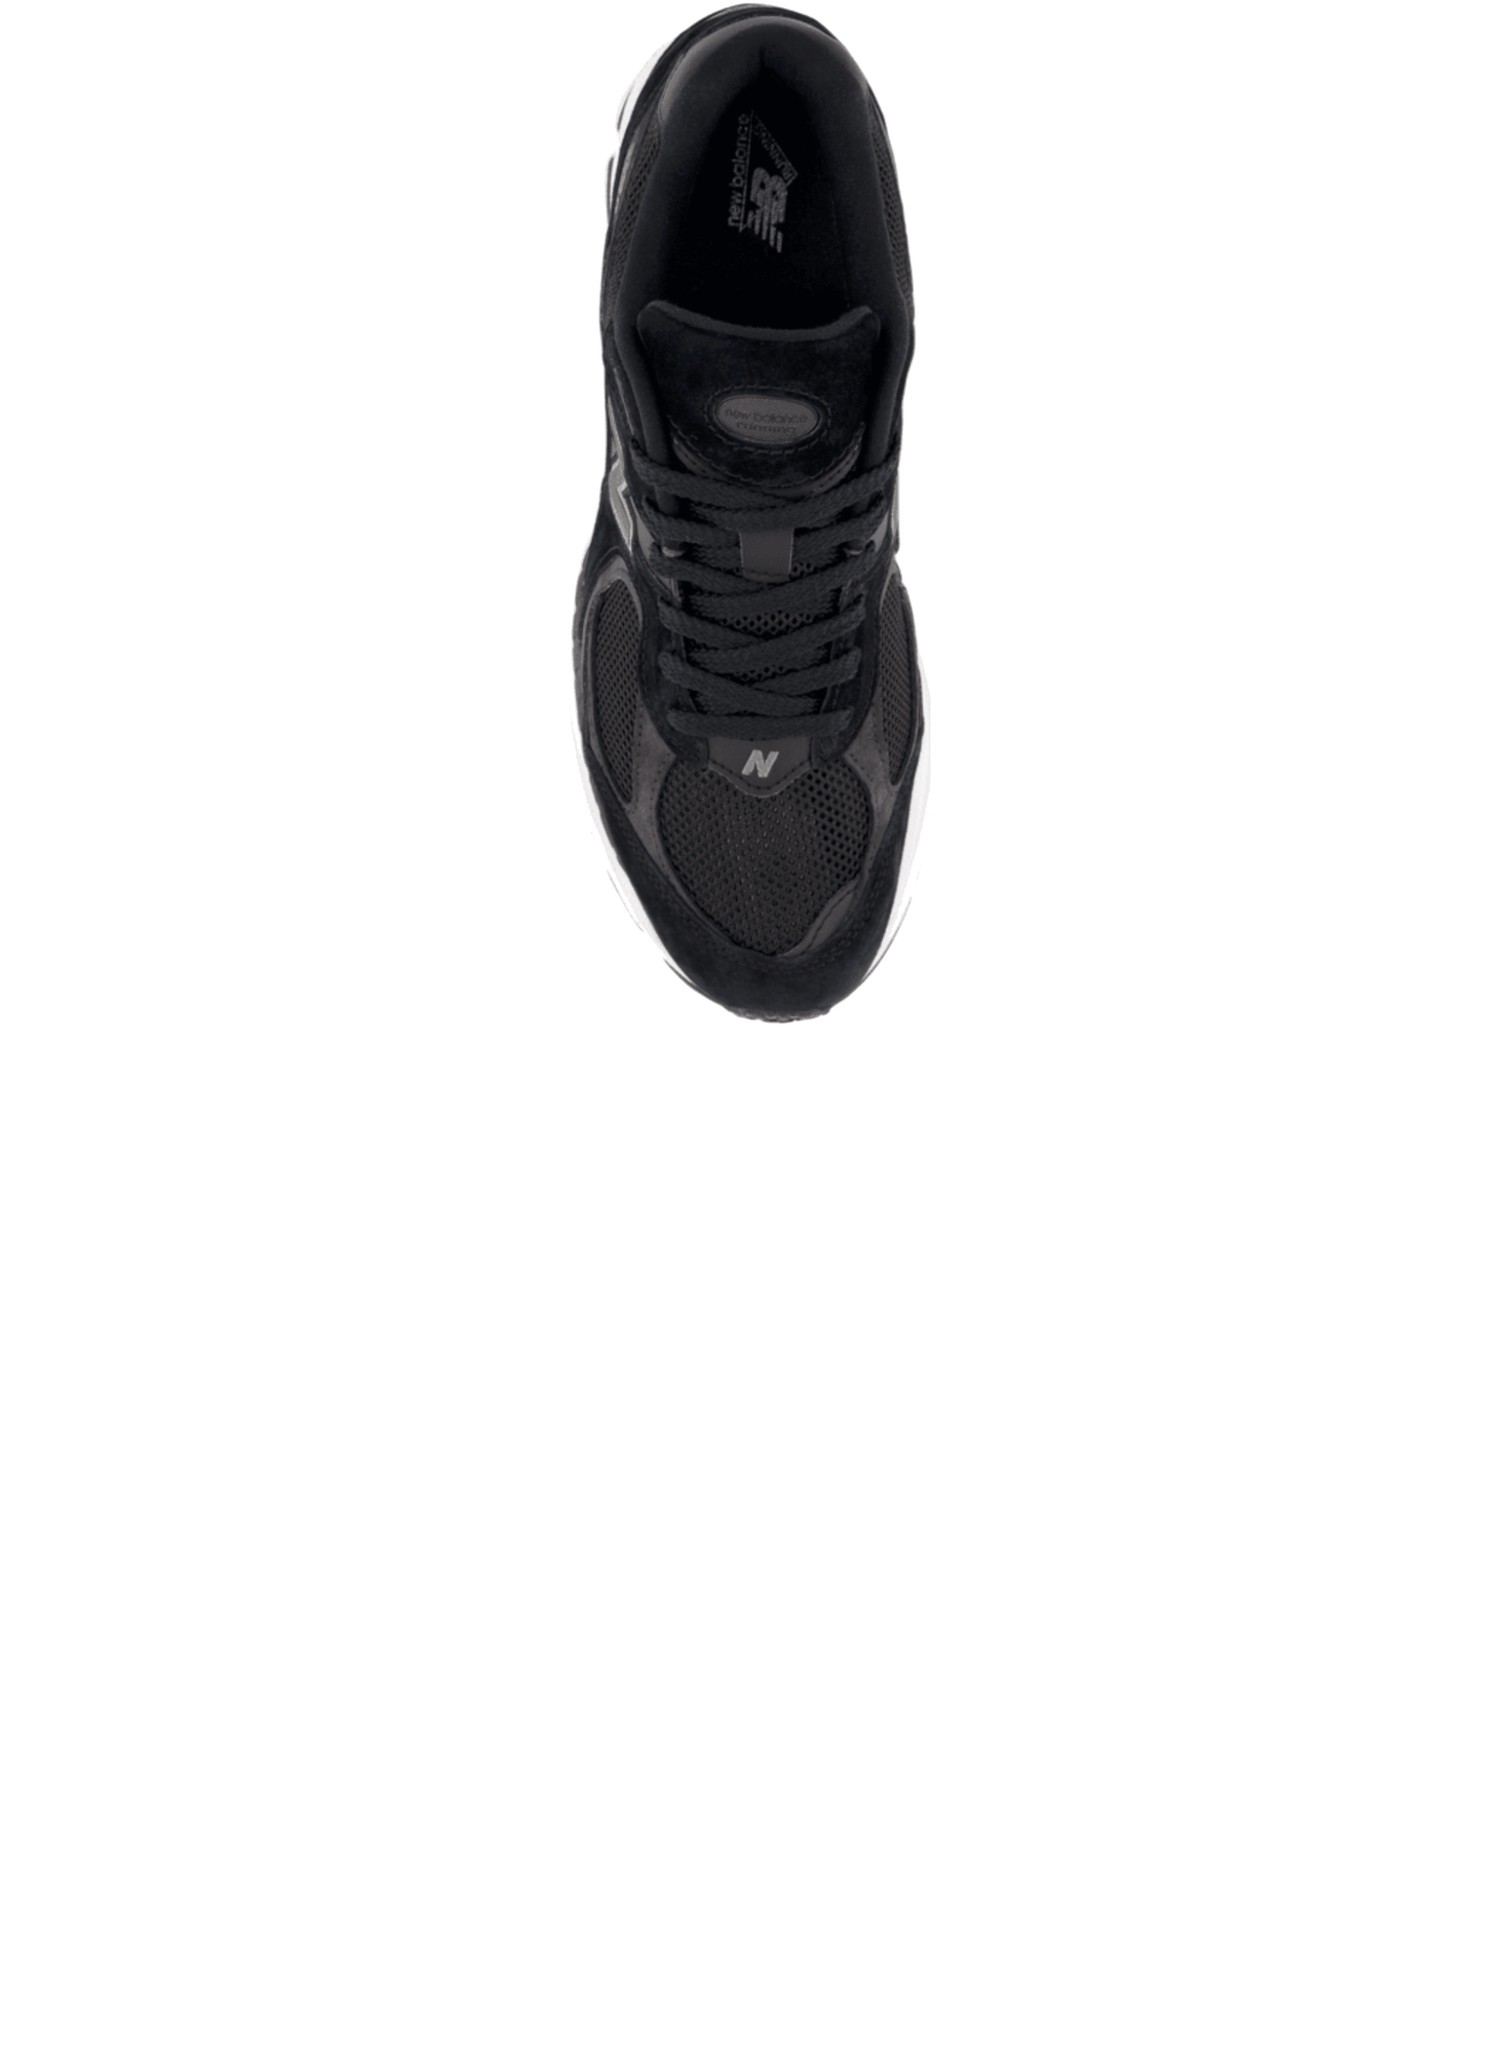 New Balance M 2002 RBK Sneakers 'Black/Phantom' | HALO - HALO